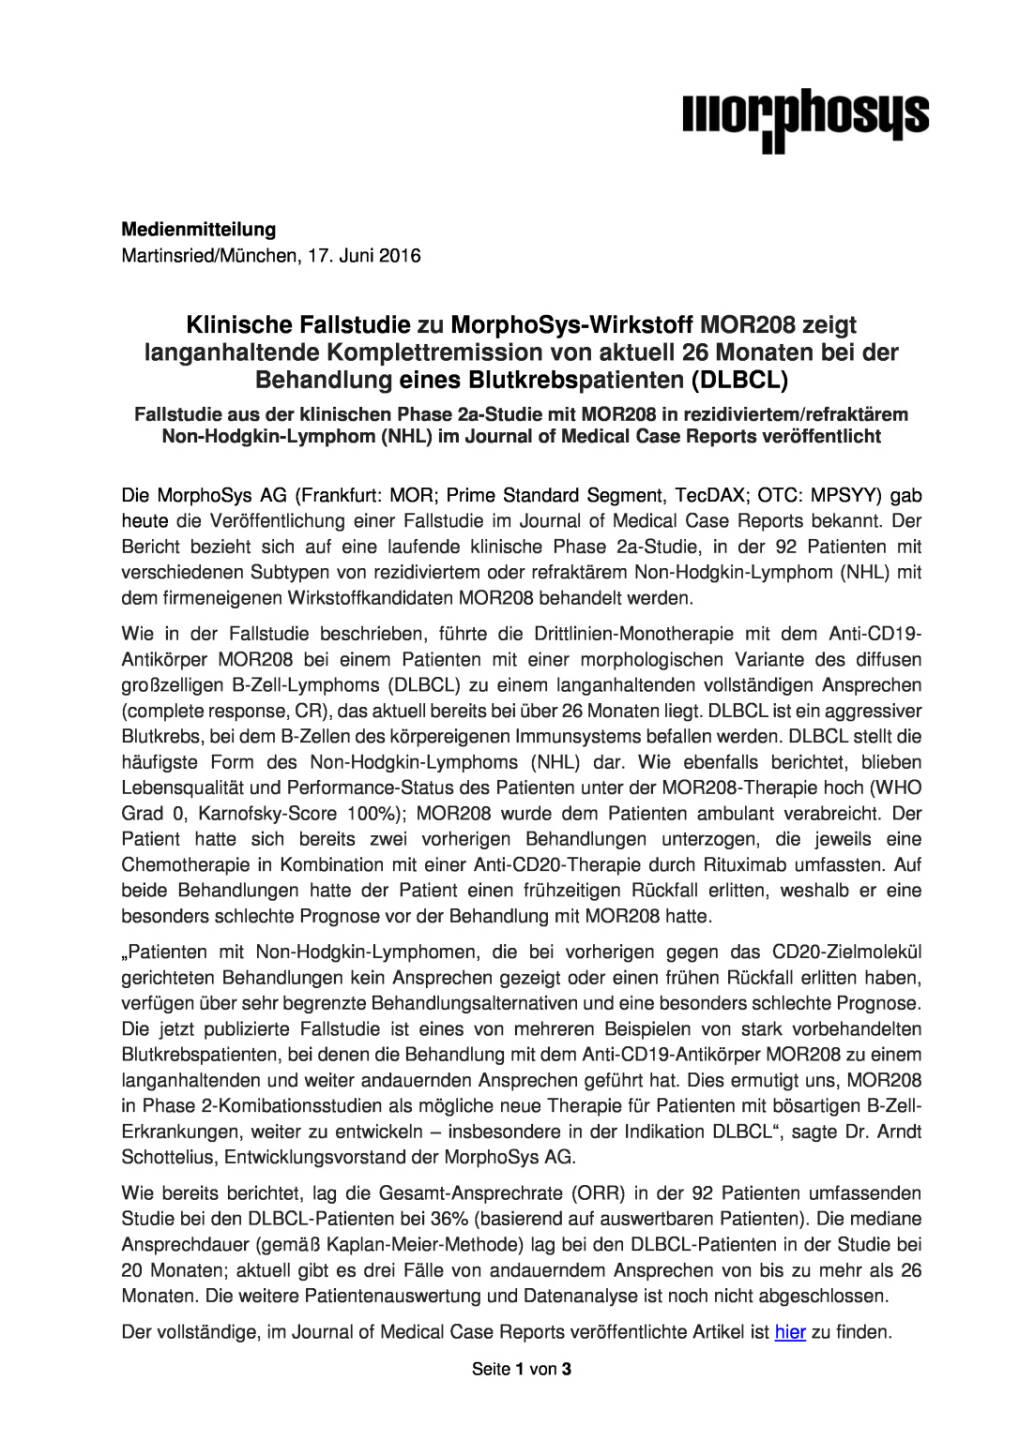 MorphoSys: Klinische Fallstudie zu Wirkstoff MOR208, Seite 1/3, komplettes Dokument unter http://boerse-social.com/static/uploads/file_1228_morphosys_klinische_fallstudie_zu_wirkstoff_mor208.pdf